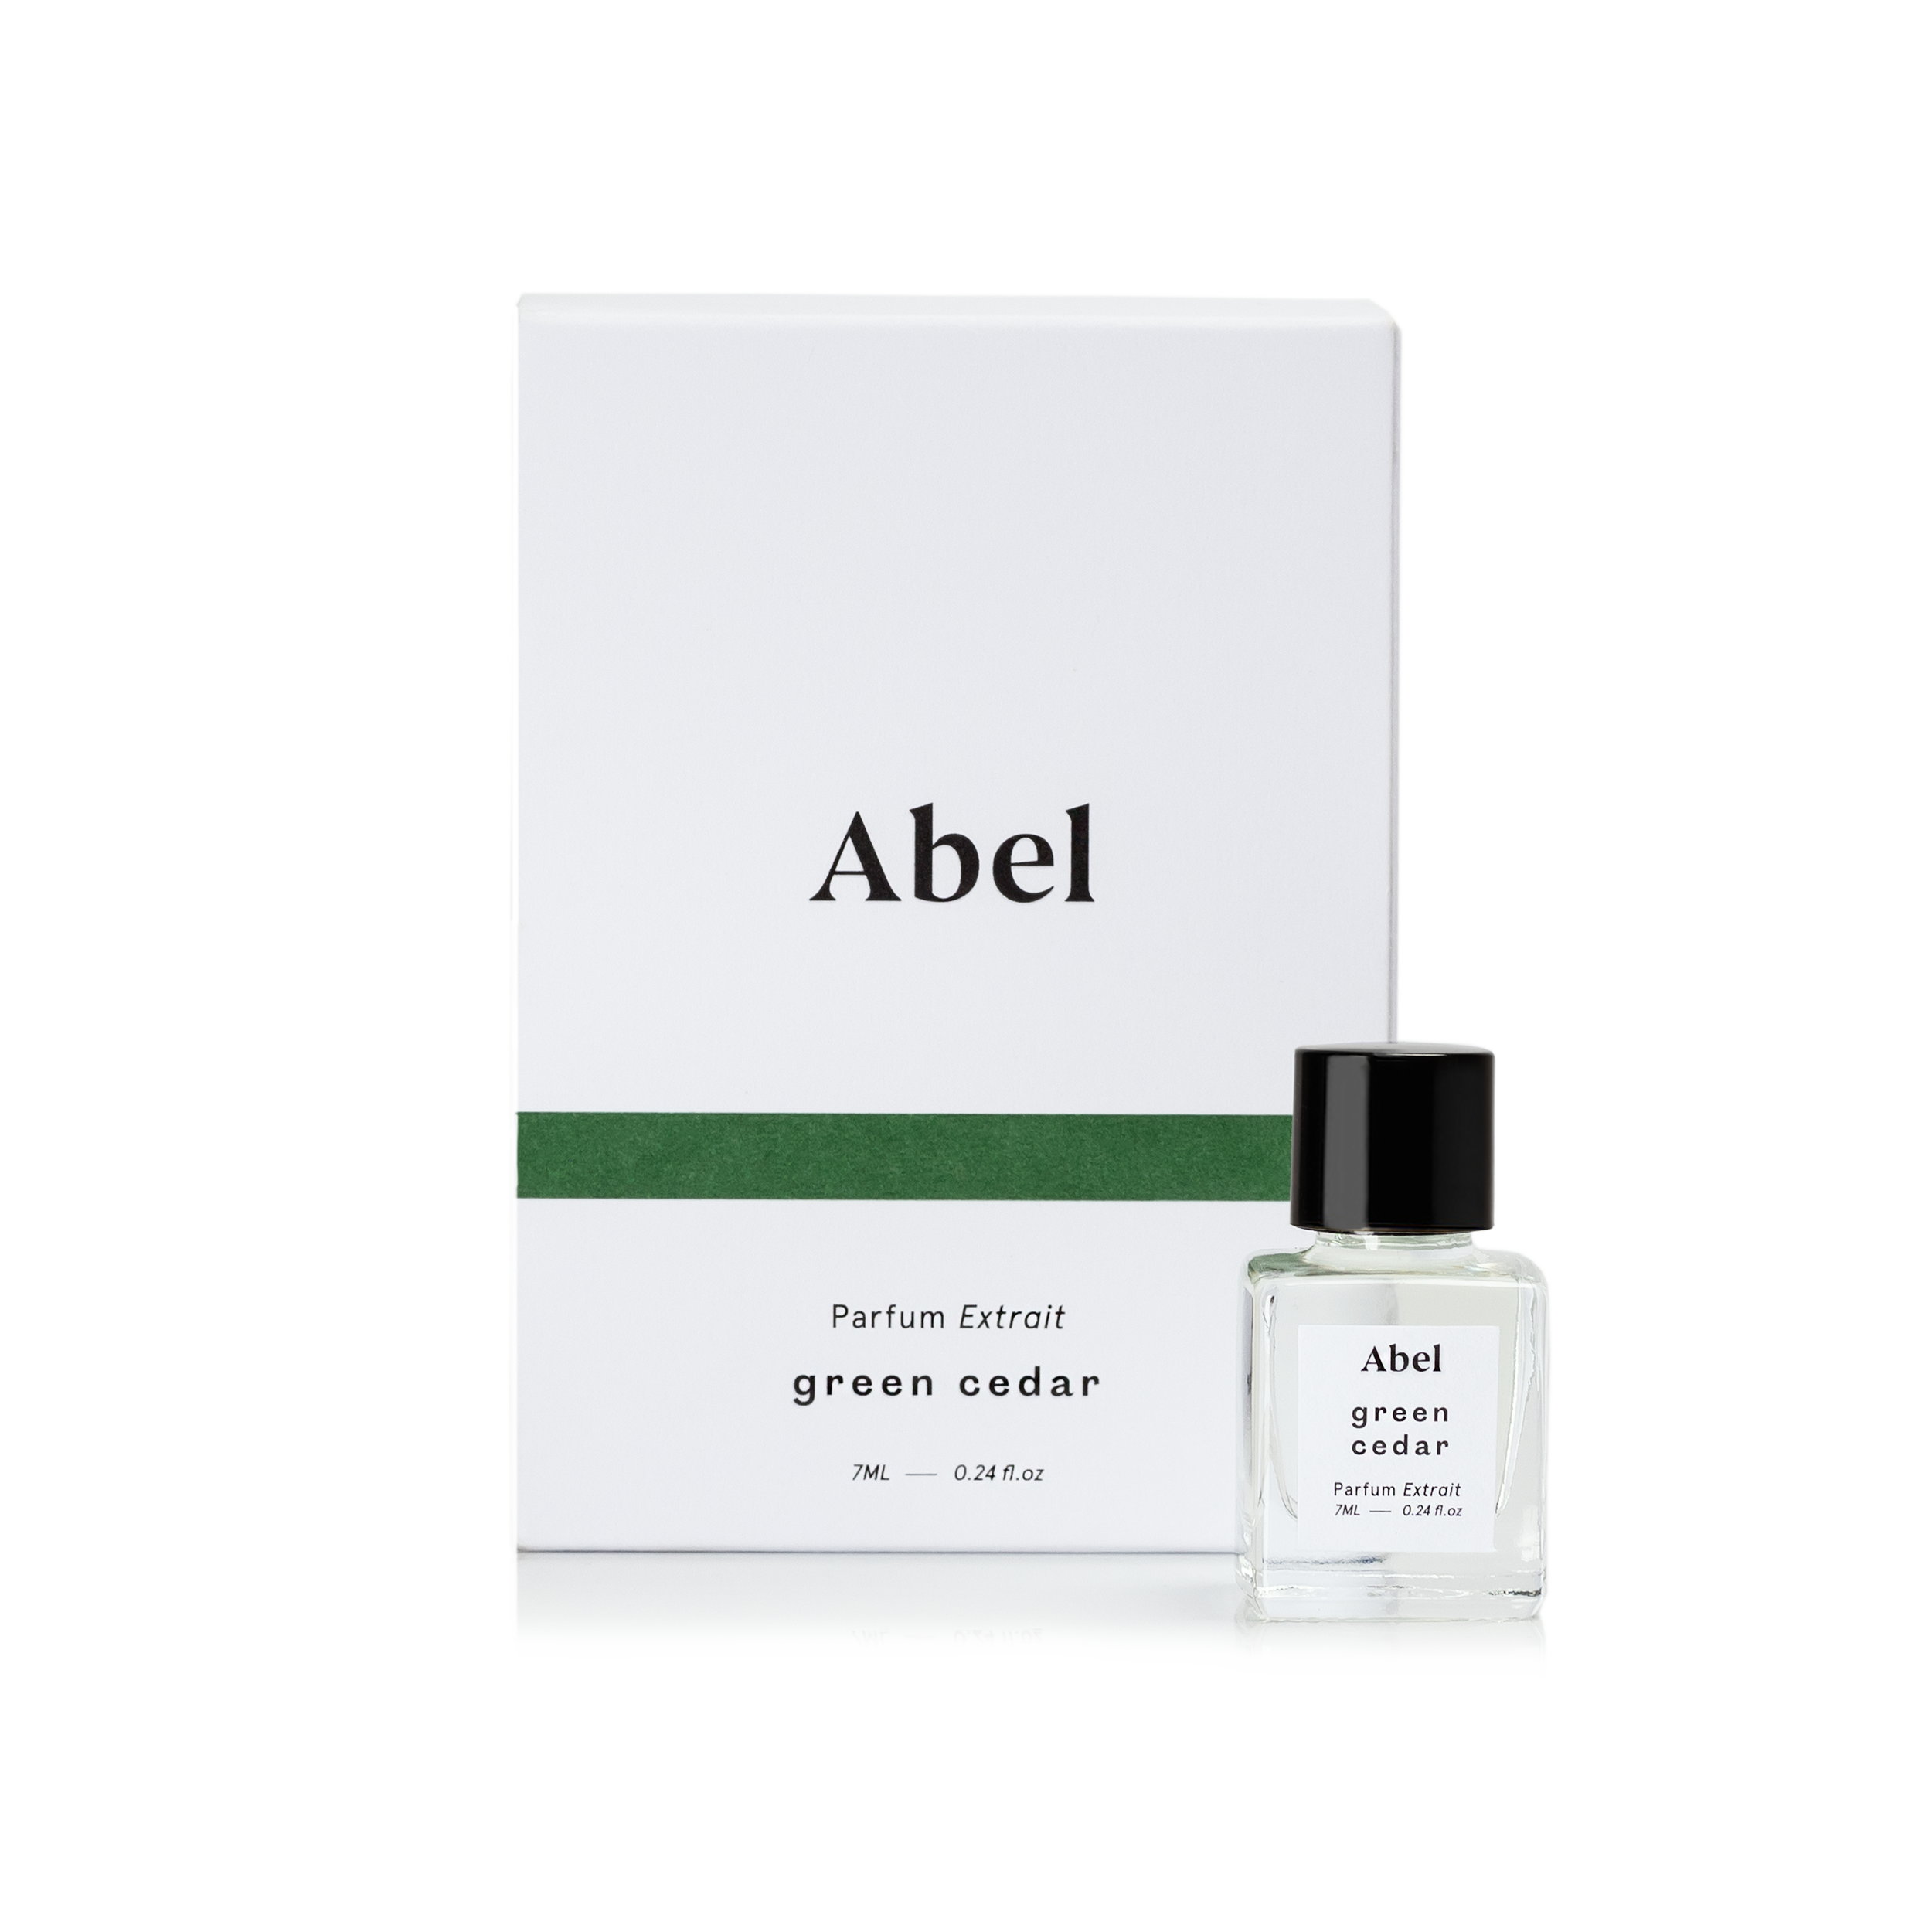 Abel Odor Green Cedar Parfum Extrait, 7mL